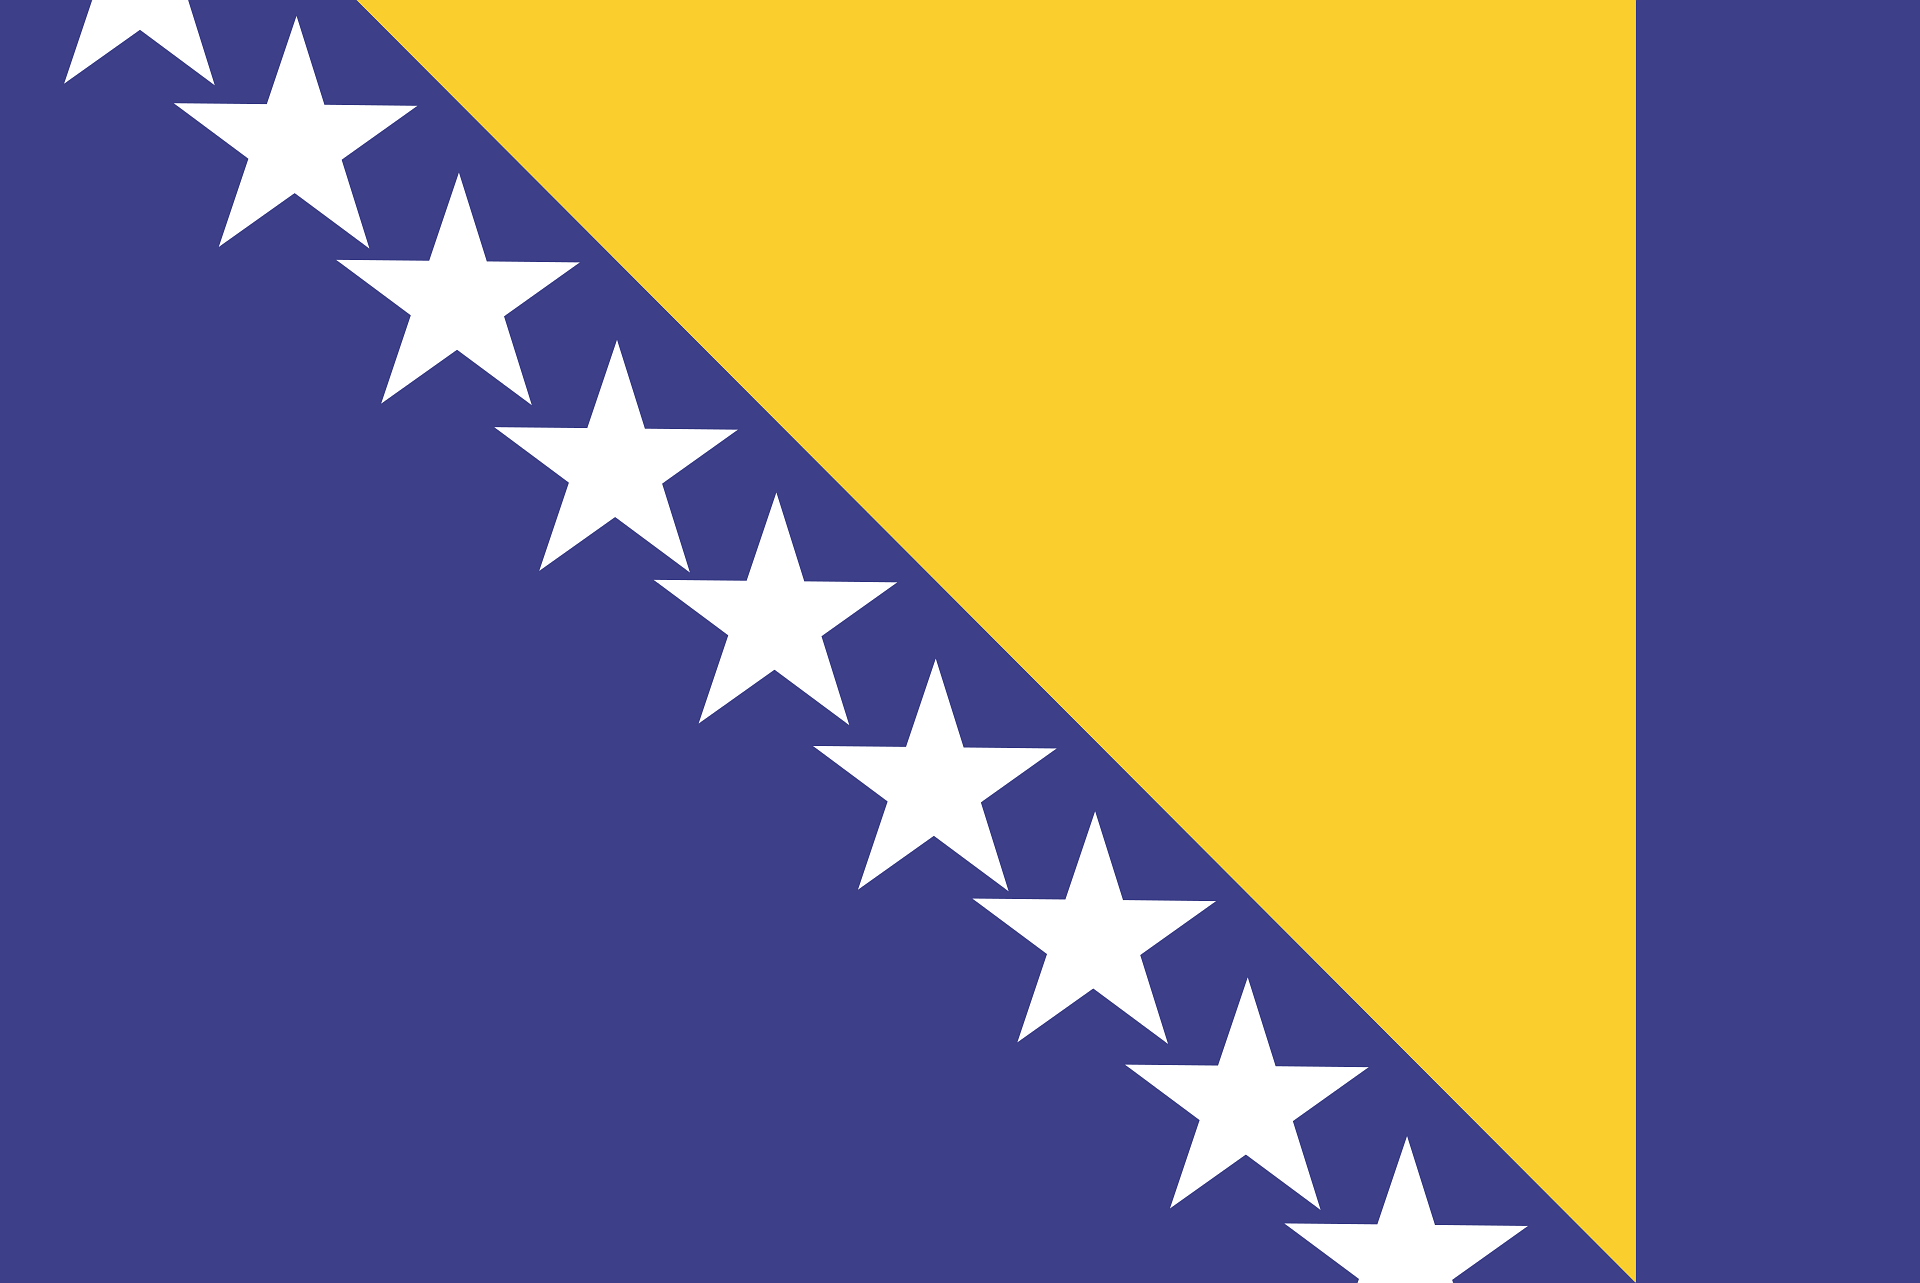 Czech Albanian Camber of Commerce - Bosnia and Herzegovina flag